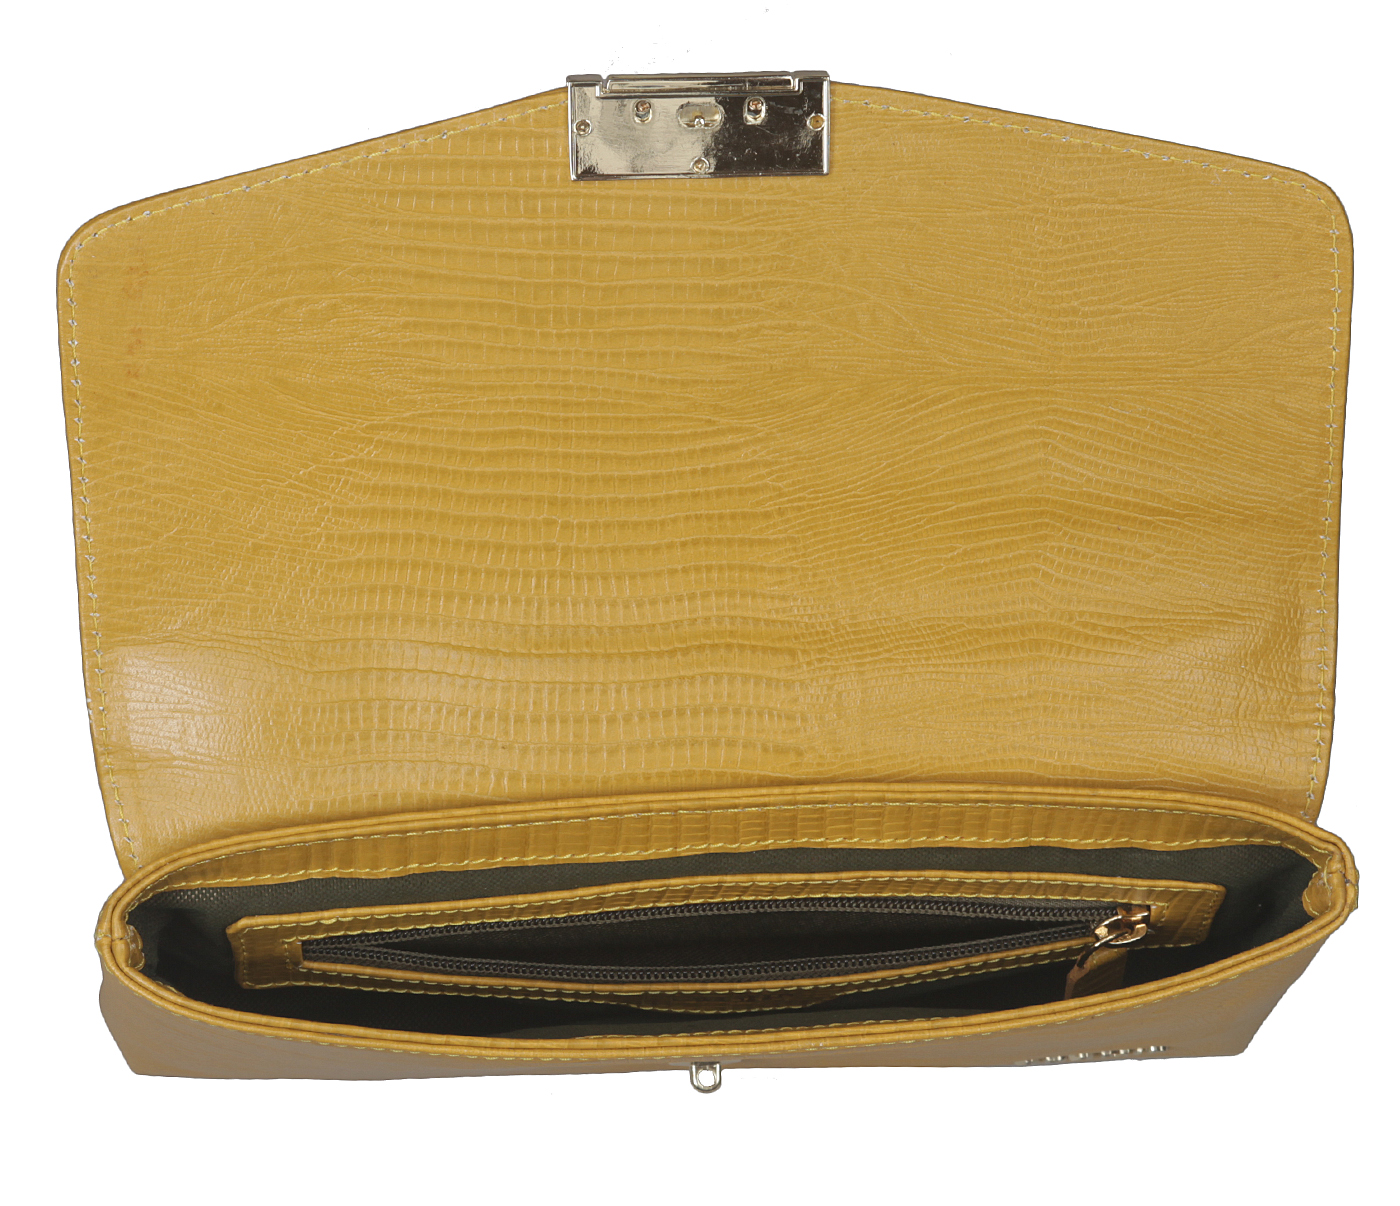 B839-Lauris-Sling cross body bag in Genuine Leather - Mustard